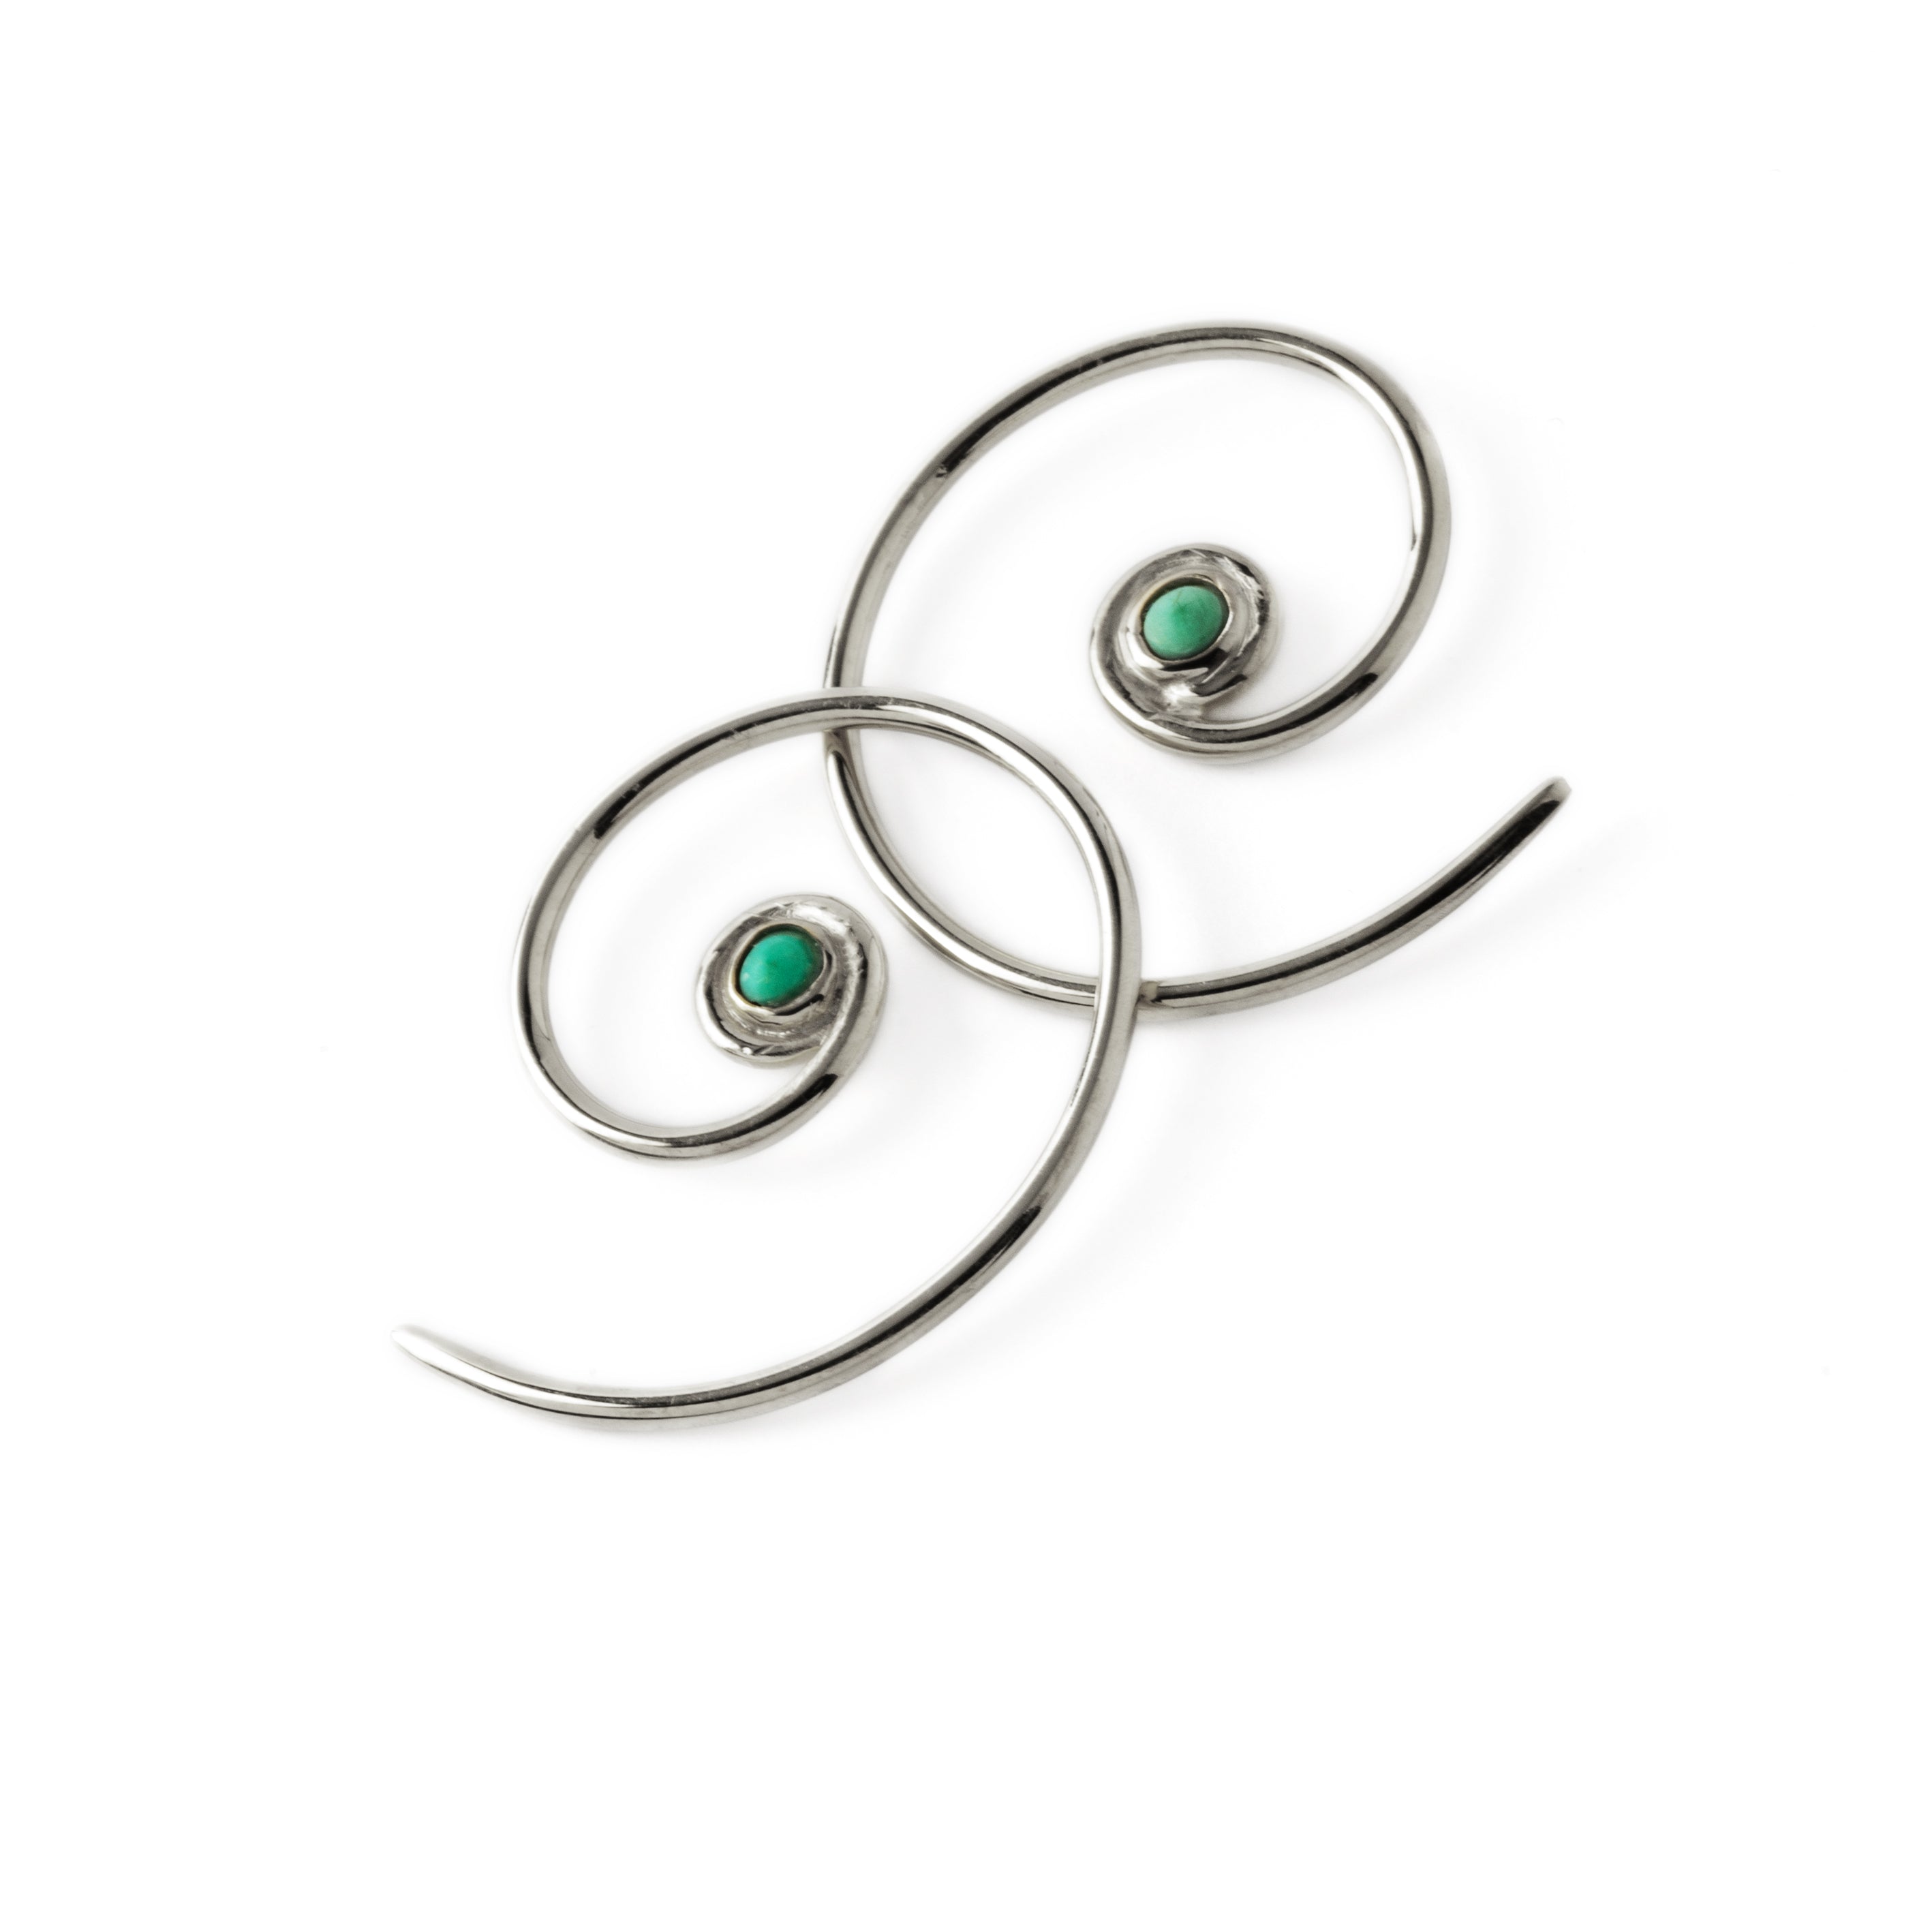 pair of Silver &amp; Turquoise Koru spiral earrings side view